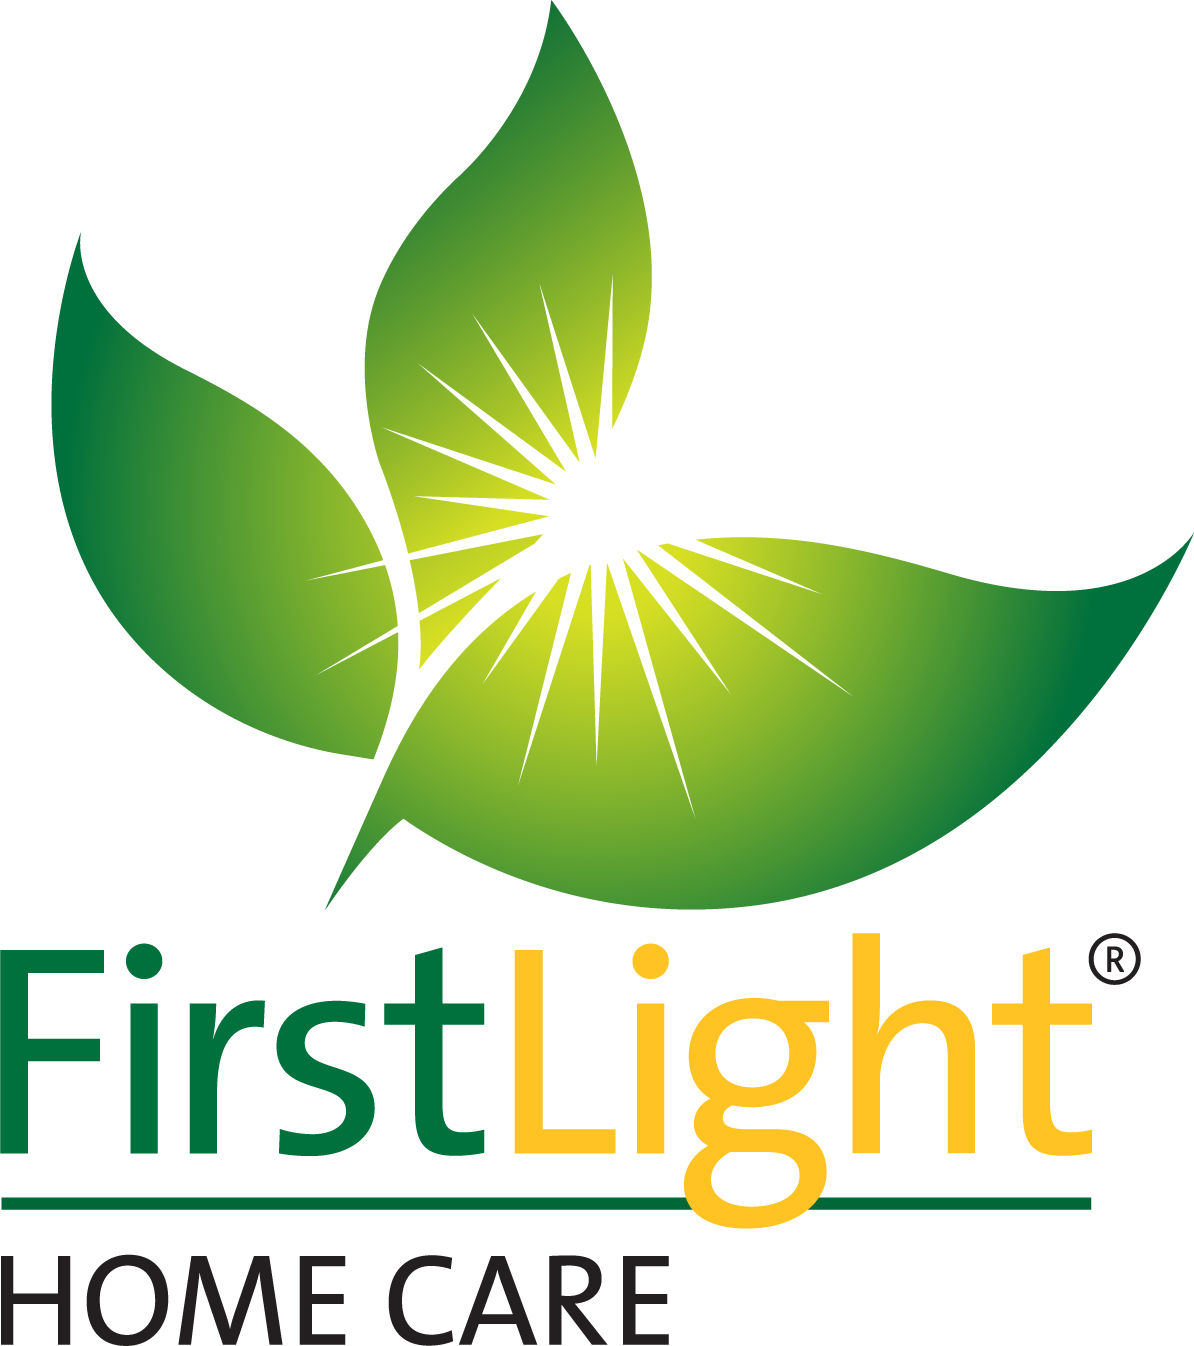 C. FirstLight Home Care (Tier 2)